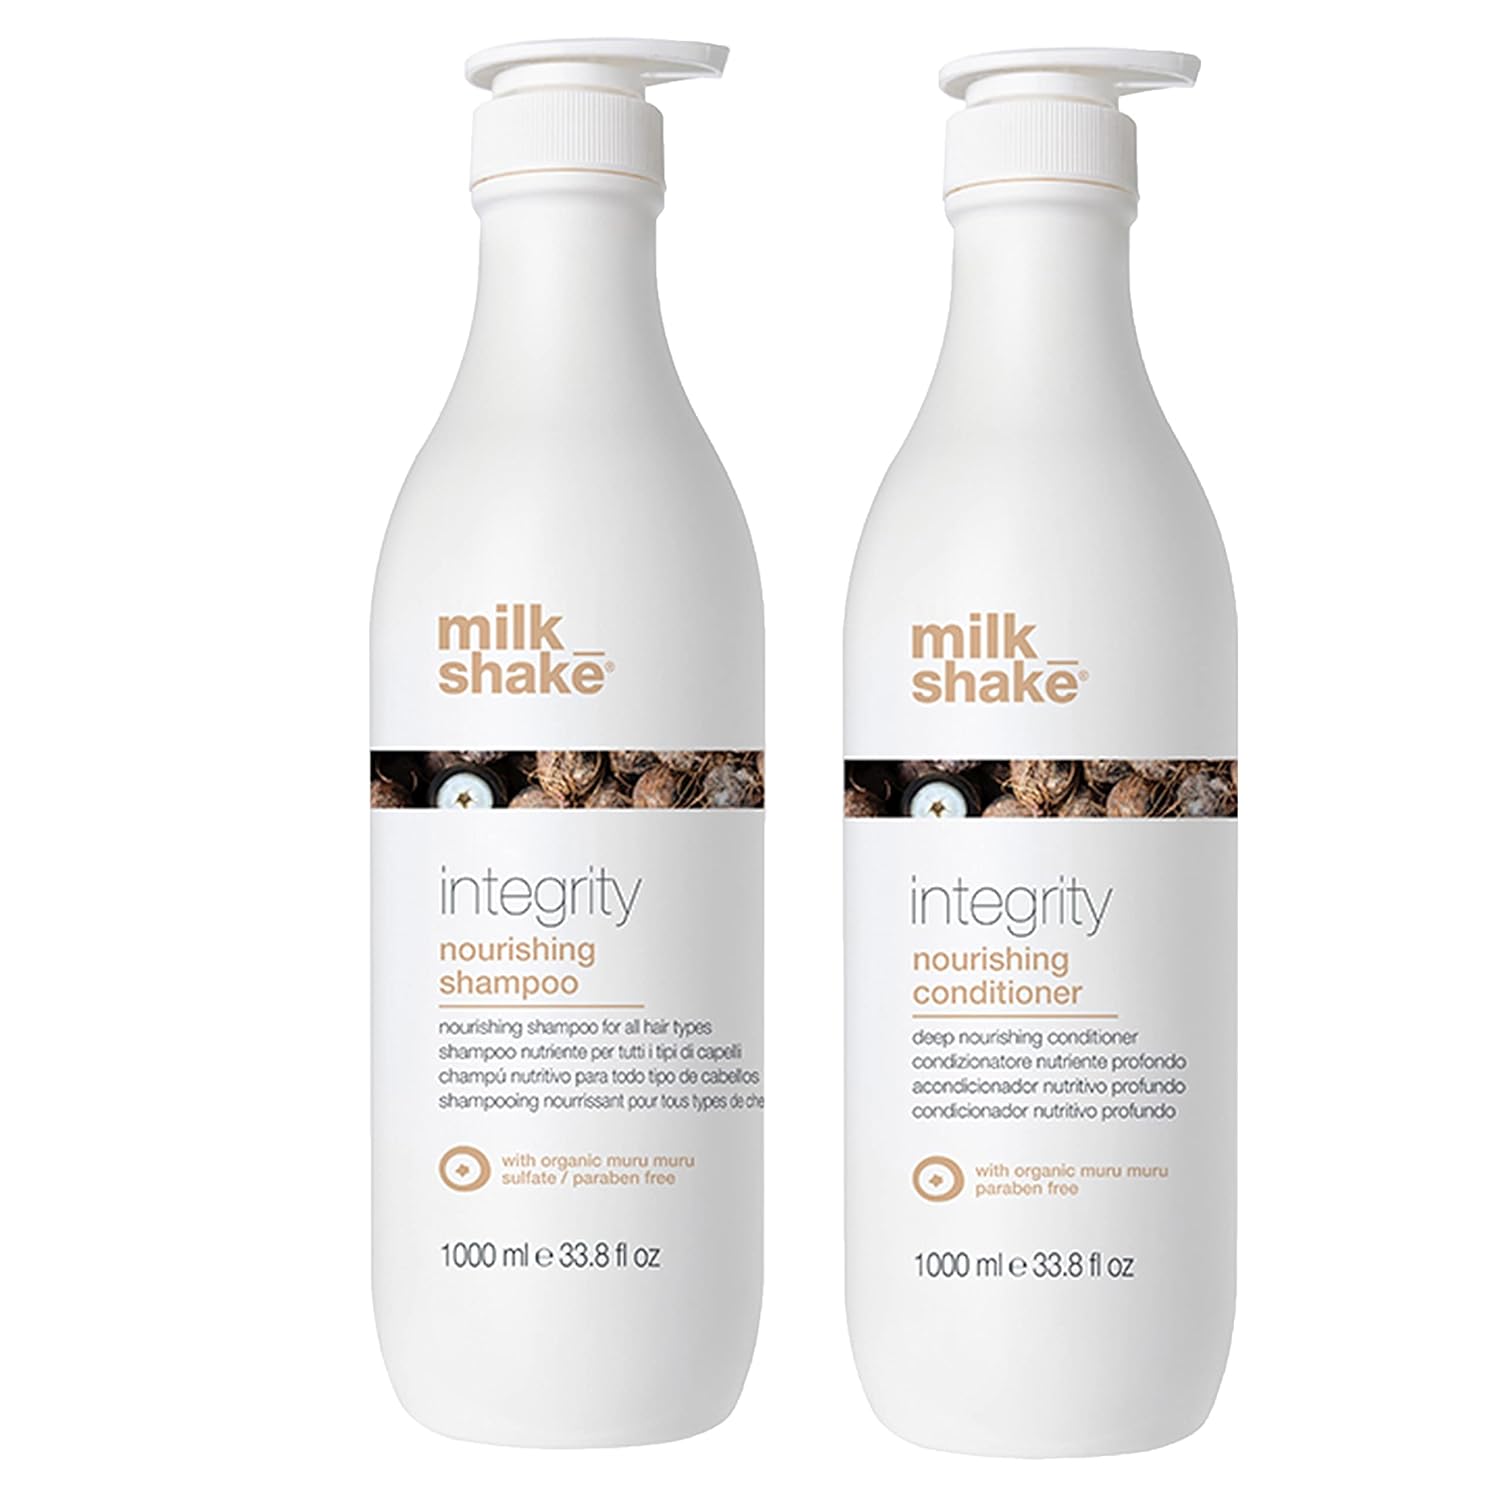 milk_shake Integrity Nourishing Conditioner - Anti Frizz Conditioner with Muru Muru Butter, Paraben Free, 33.8 Fl Oz : Beauty & Personal Care